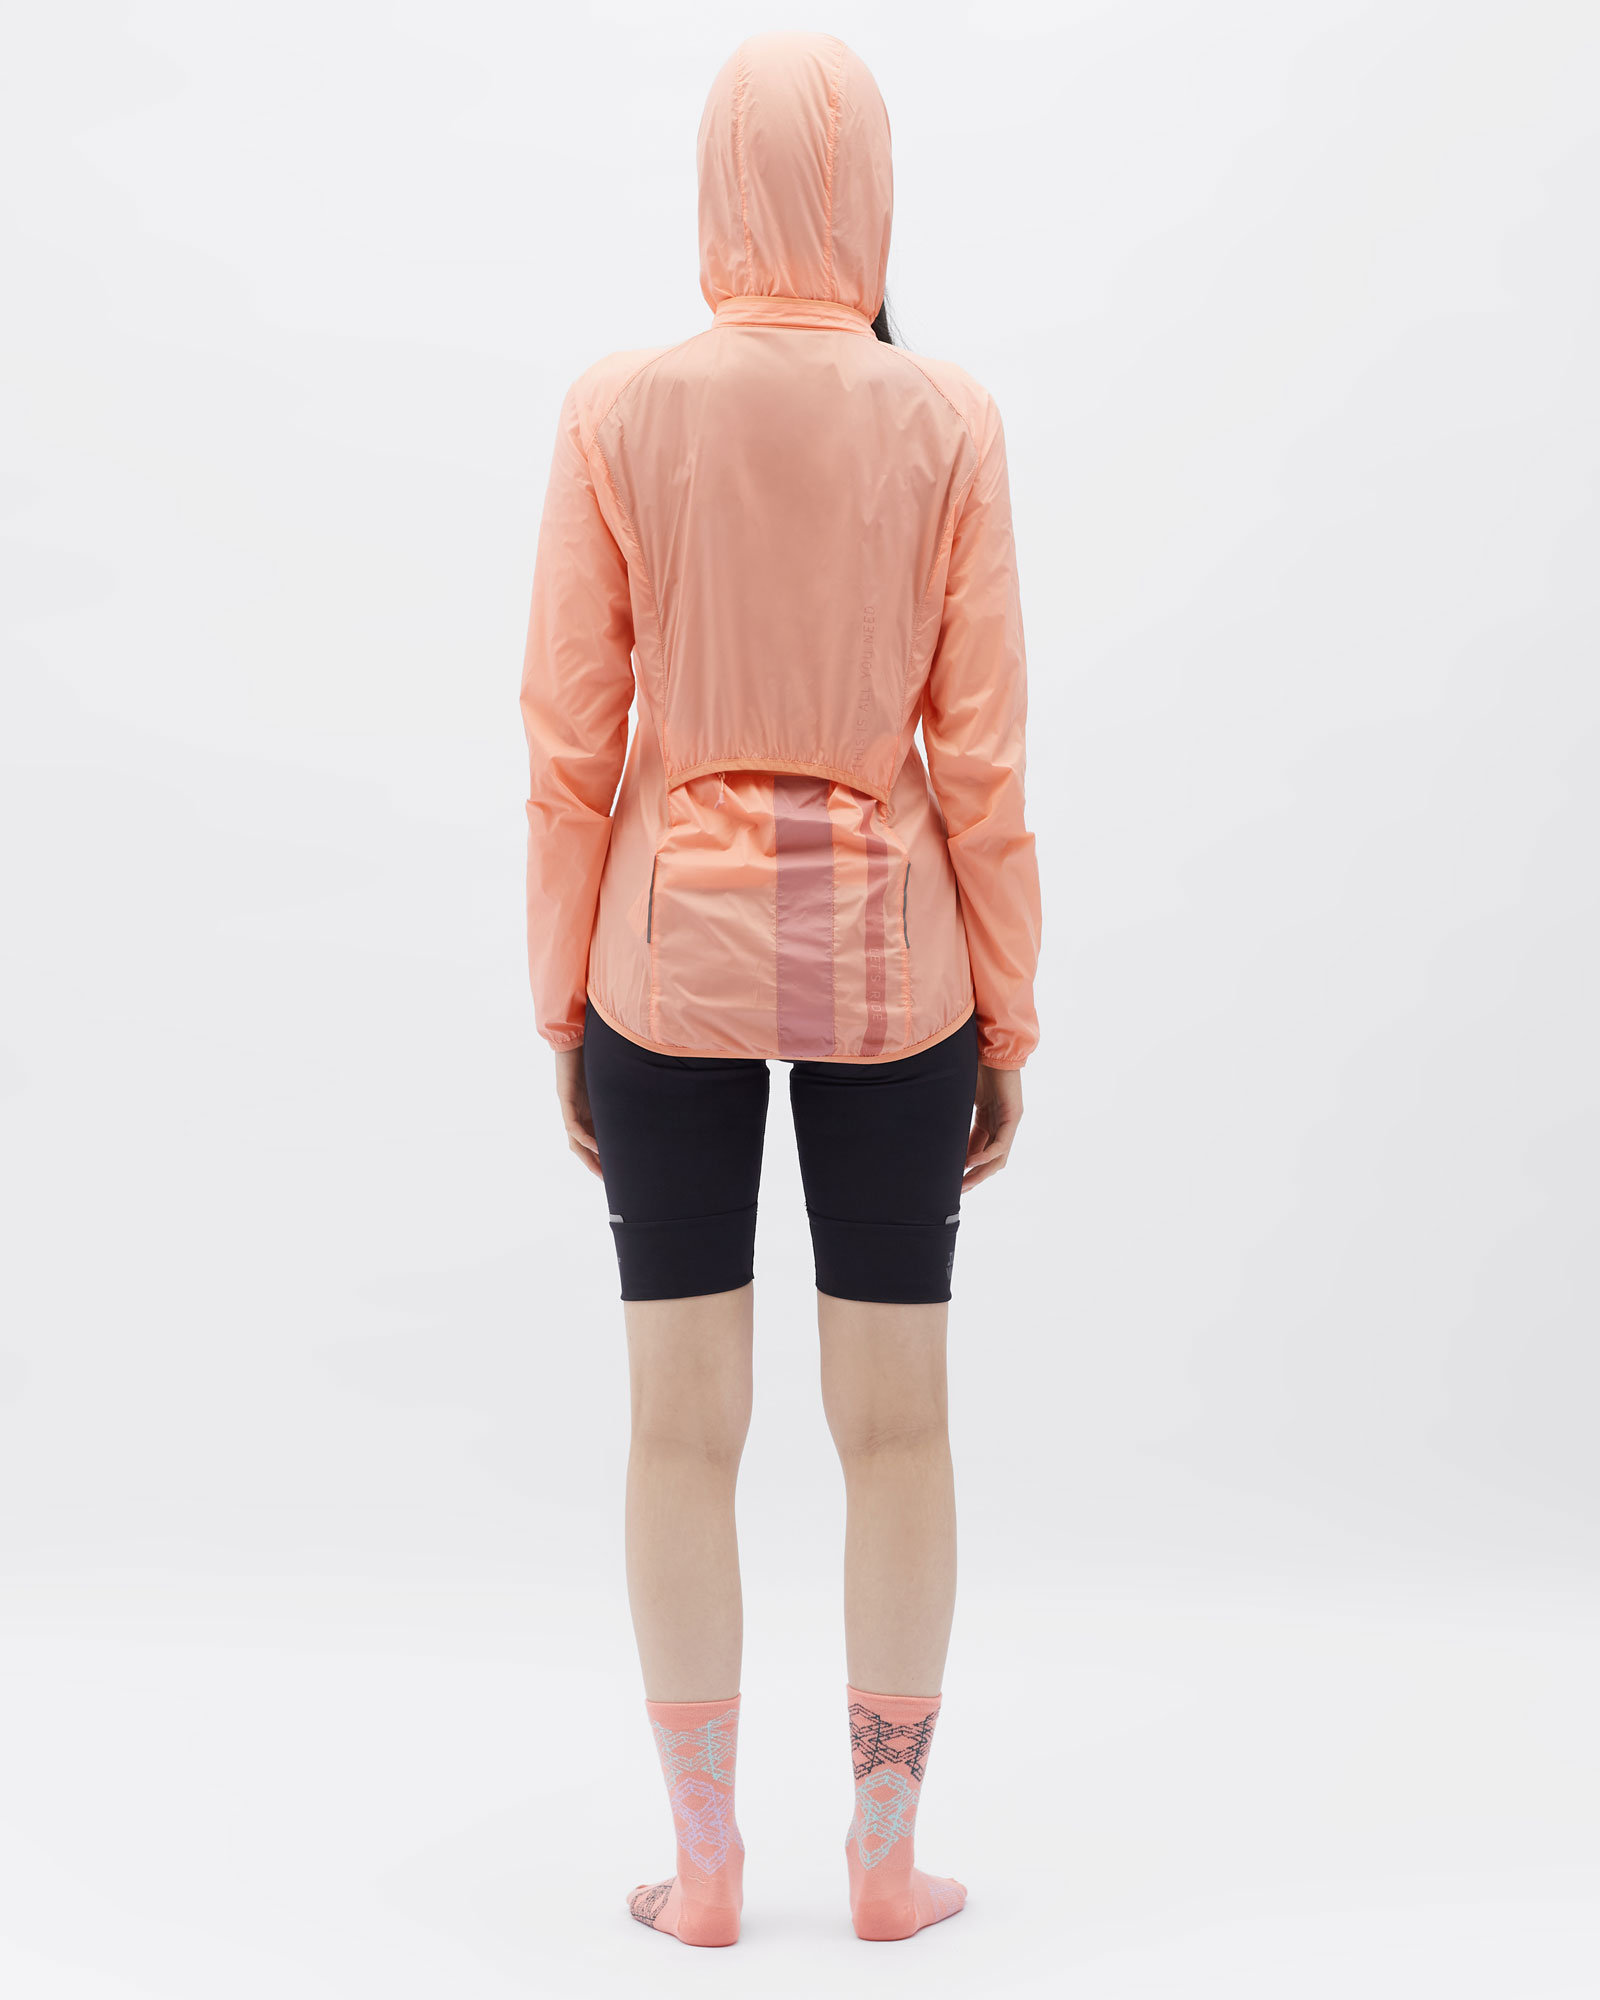 Women’s ultralight cycling jacket